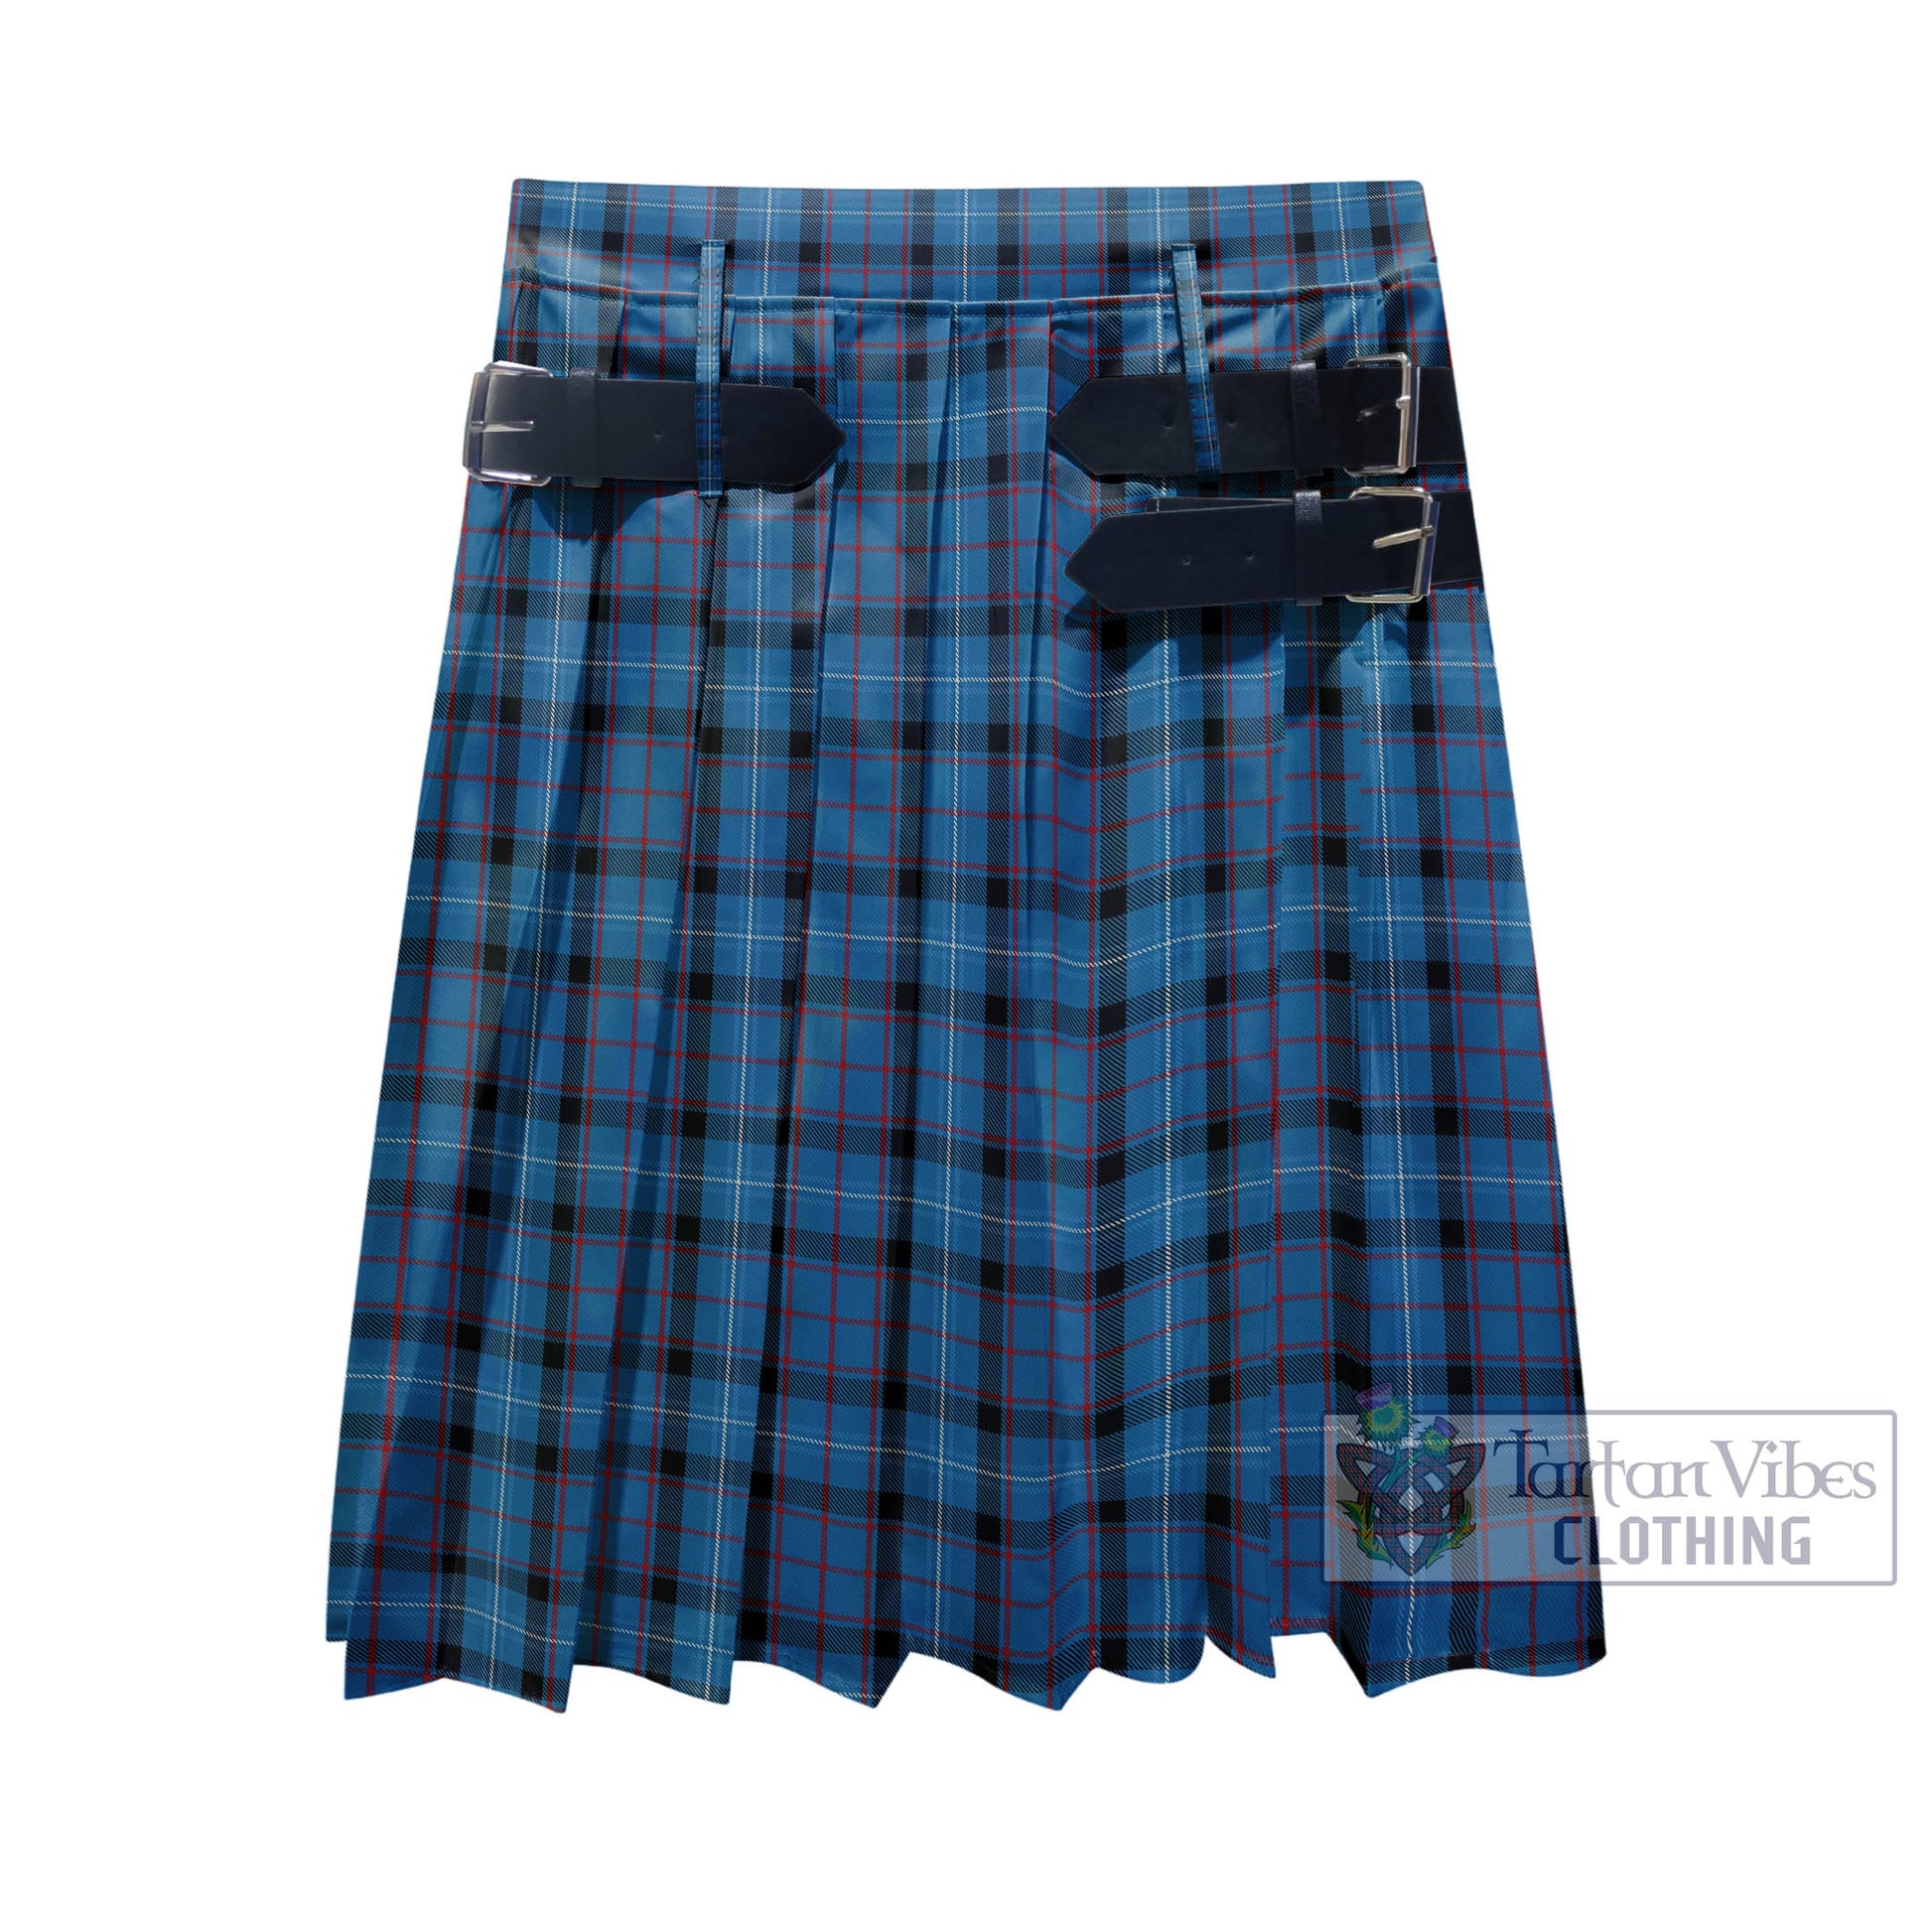 Tartan Vibes Clothing Fitzgerald Family Tartan Men's Pleated Skirt - Fashion Casual Retro Scottish Style